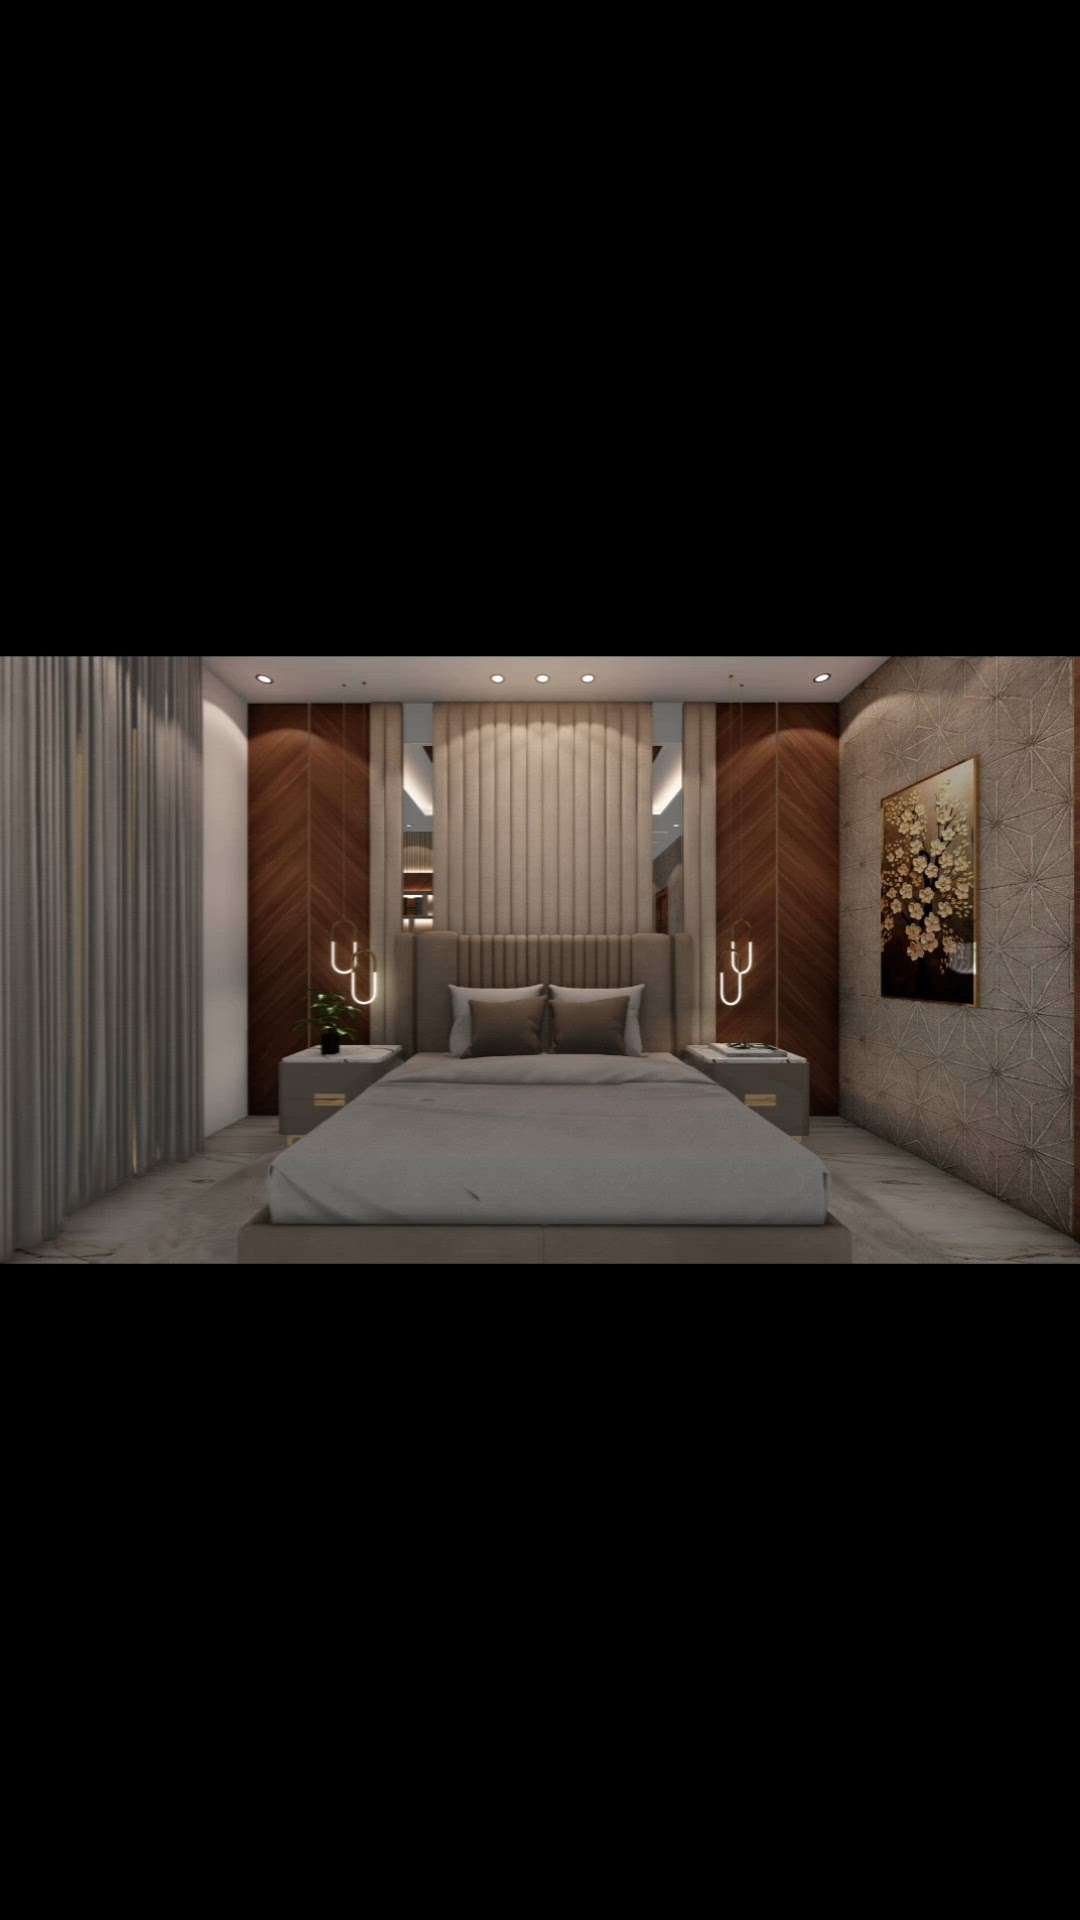 Bedroom Interior ❤️
8077017254
 #BedroomDecor  #MasterBedroom  #KingsizeBedroom  #BedroomDesigns  #BedroomIdeas  #ModernBedMaking  #BedroomCeilingDesign  #LUXURY_BED  #3bedroom  #bedroomplan  #bedroomdeaignideas  #BedroomIdeas  #Architect  #Architectural&Interior  #architecturedesigns  #architact  #architecturedesign    #InteriorDesigner  #Delhihome   #gurugram  #faridabad  #gaziabad  #greaternoida  #noida  #muradnagar  #hapur  #bulandshahar  #muzaffarnagar  #khatuali  #saharanpur  #roorkee  #haridwar  #Dehradun  #dehradoon  #dehradunsmartcity  #uttrakhand  #uttarpradesh  #himachal  #punjab  #chandigarh  #rajasthan  #bharat   #LUXURY_INTERIOR